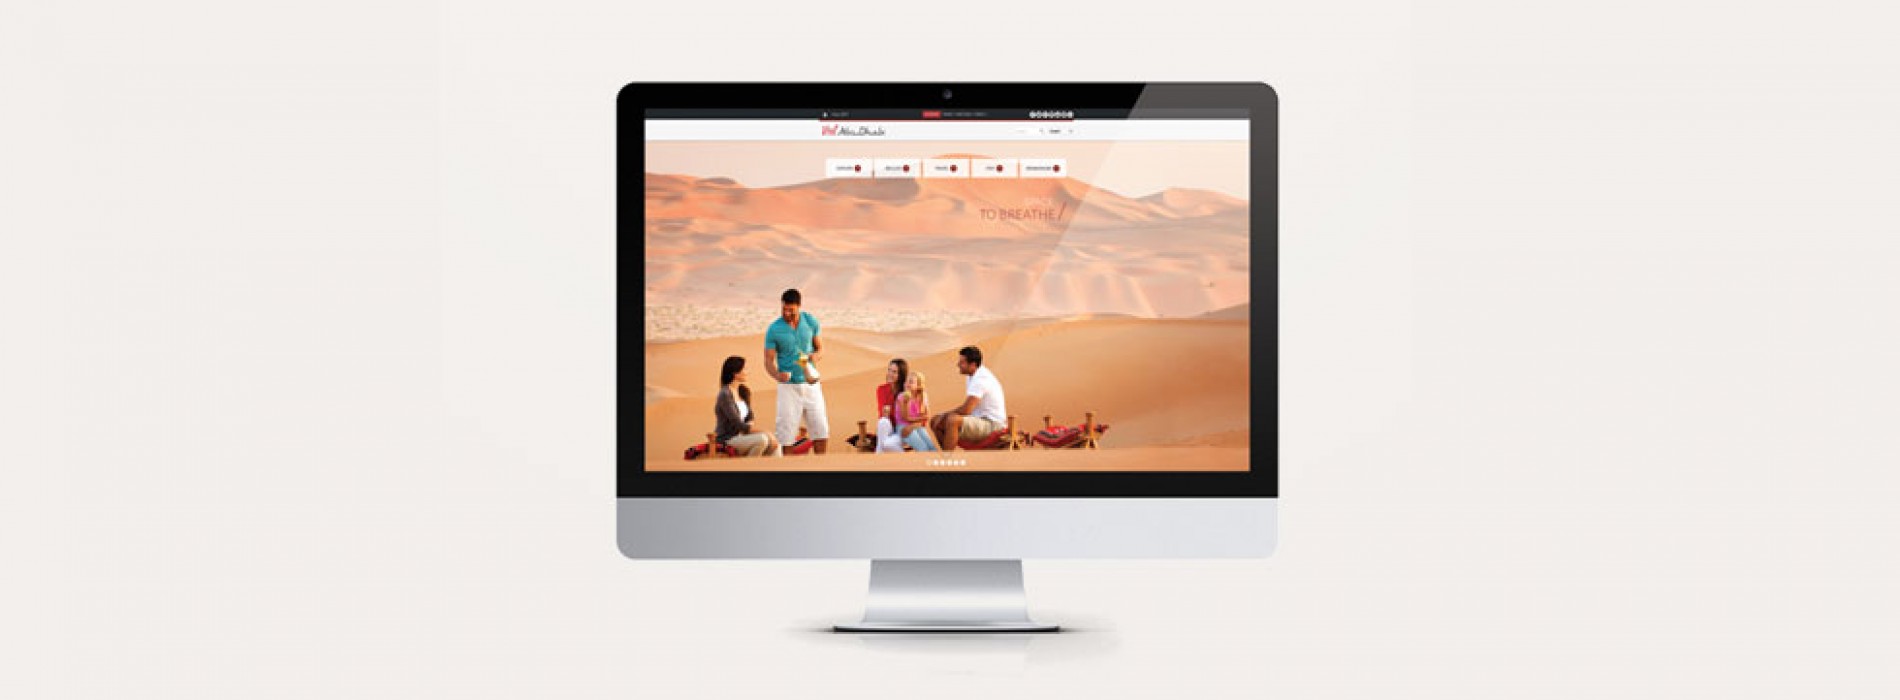 IMPROVED DESTINATION WEBSITE SET TO INSPIRE MORE VISITS TO ABU DHABI